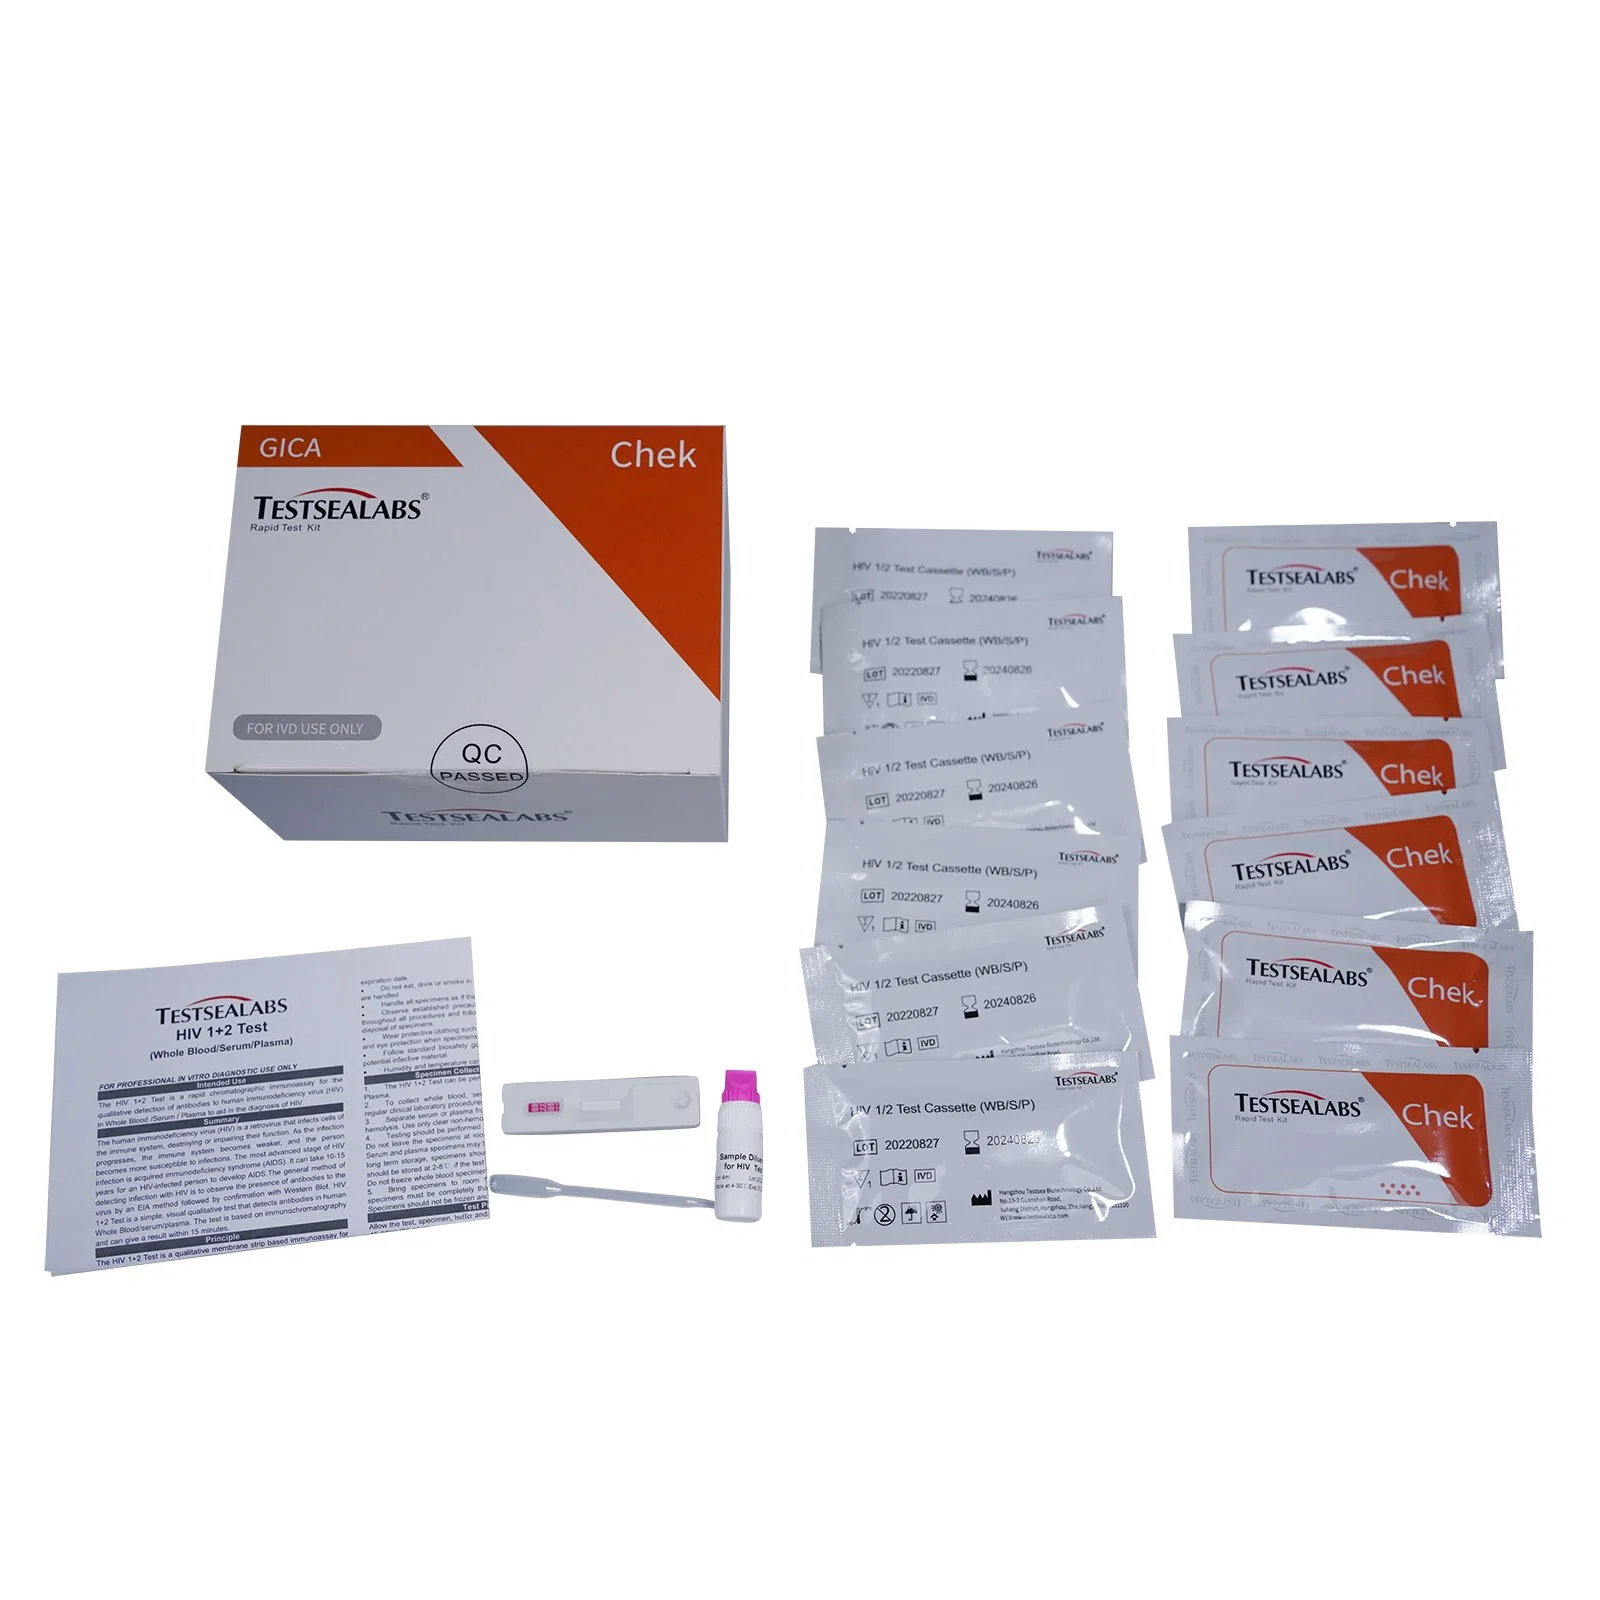 HIV Blood Test/Diagnostic HIV 1/2 Antigen Rapid Test Strips Kit for Human